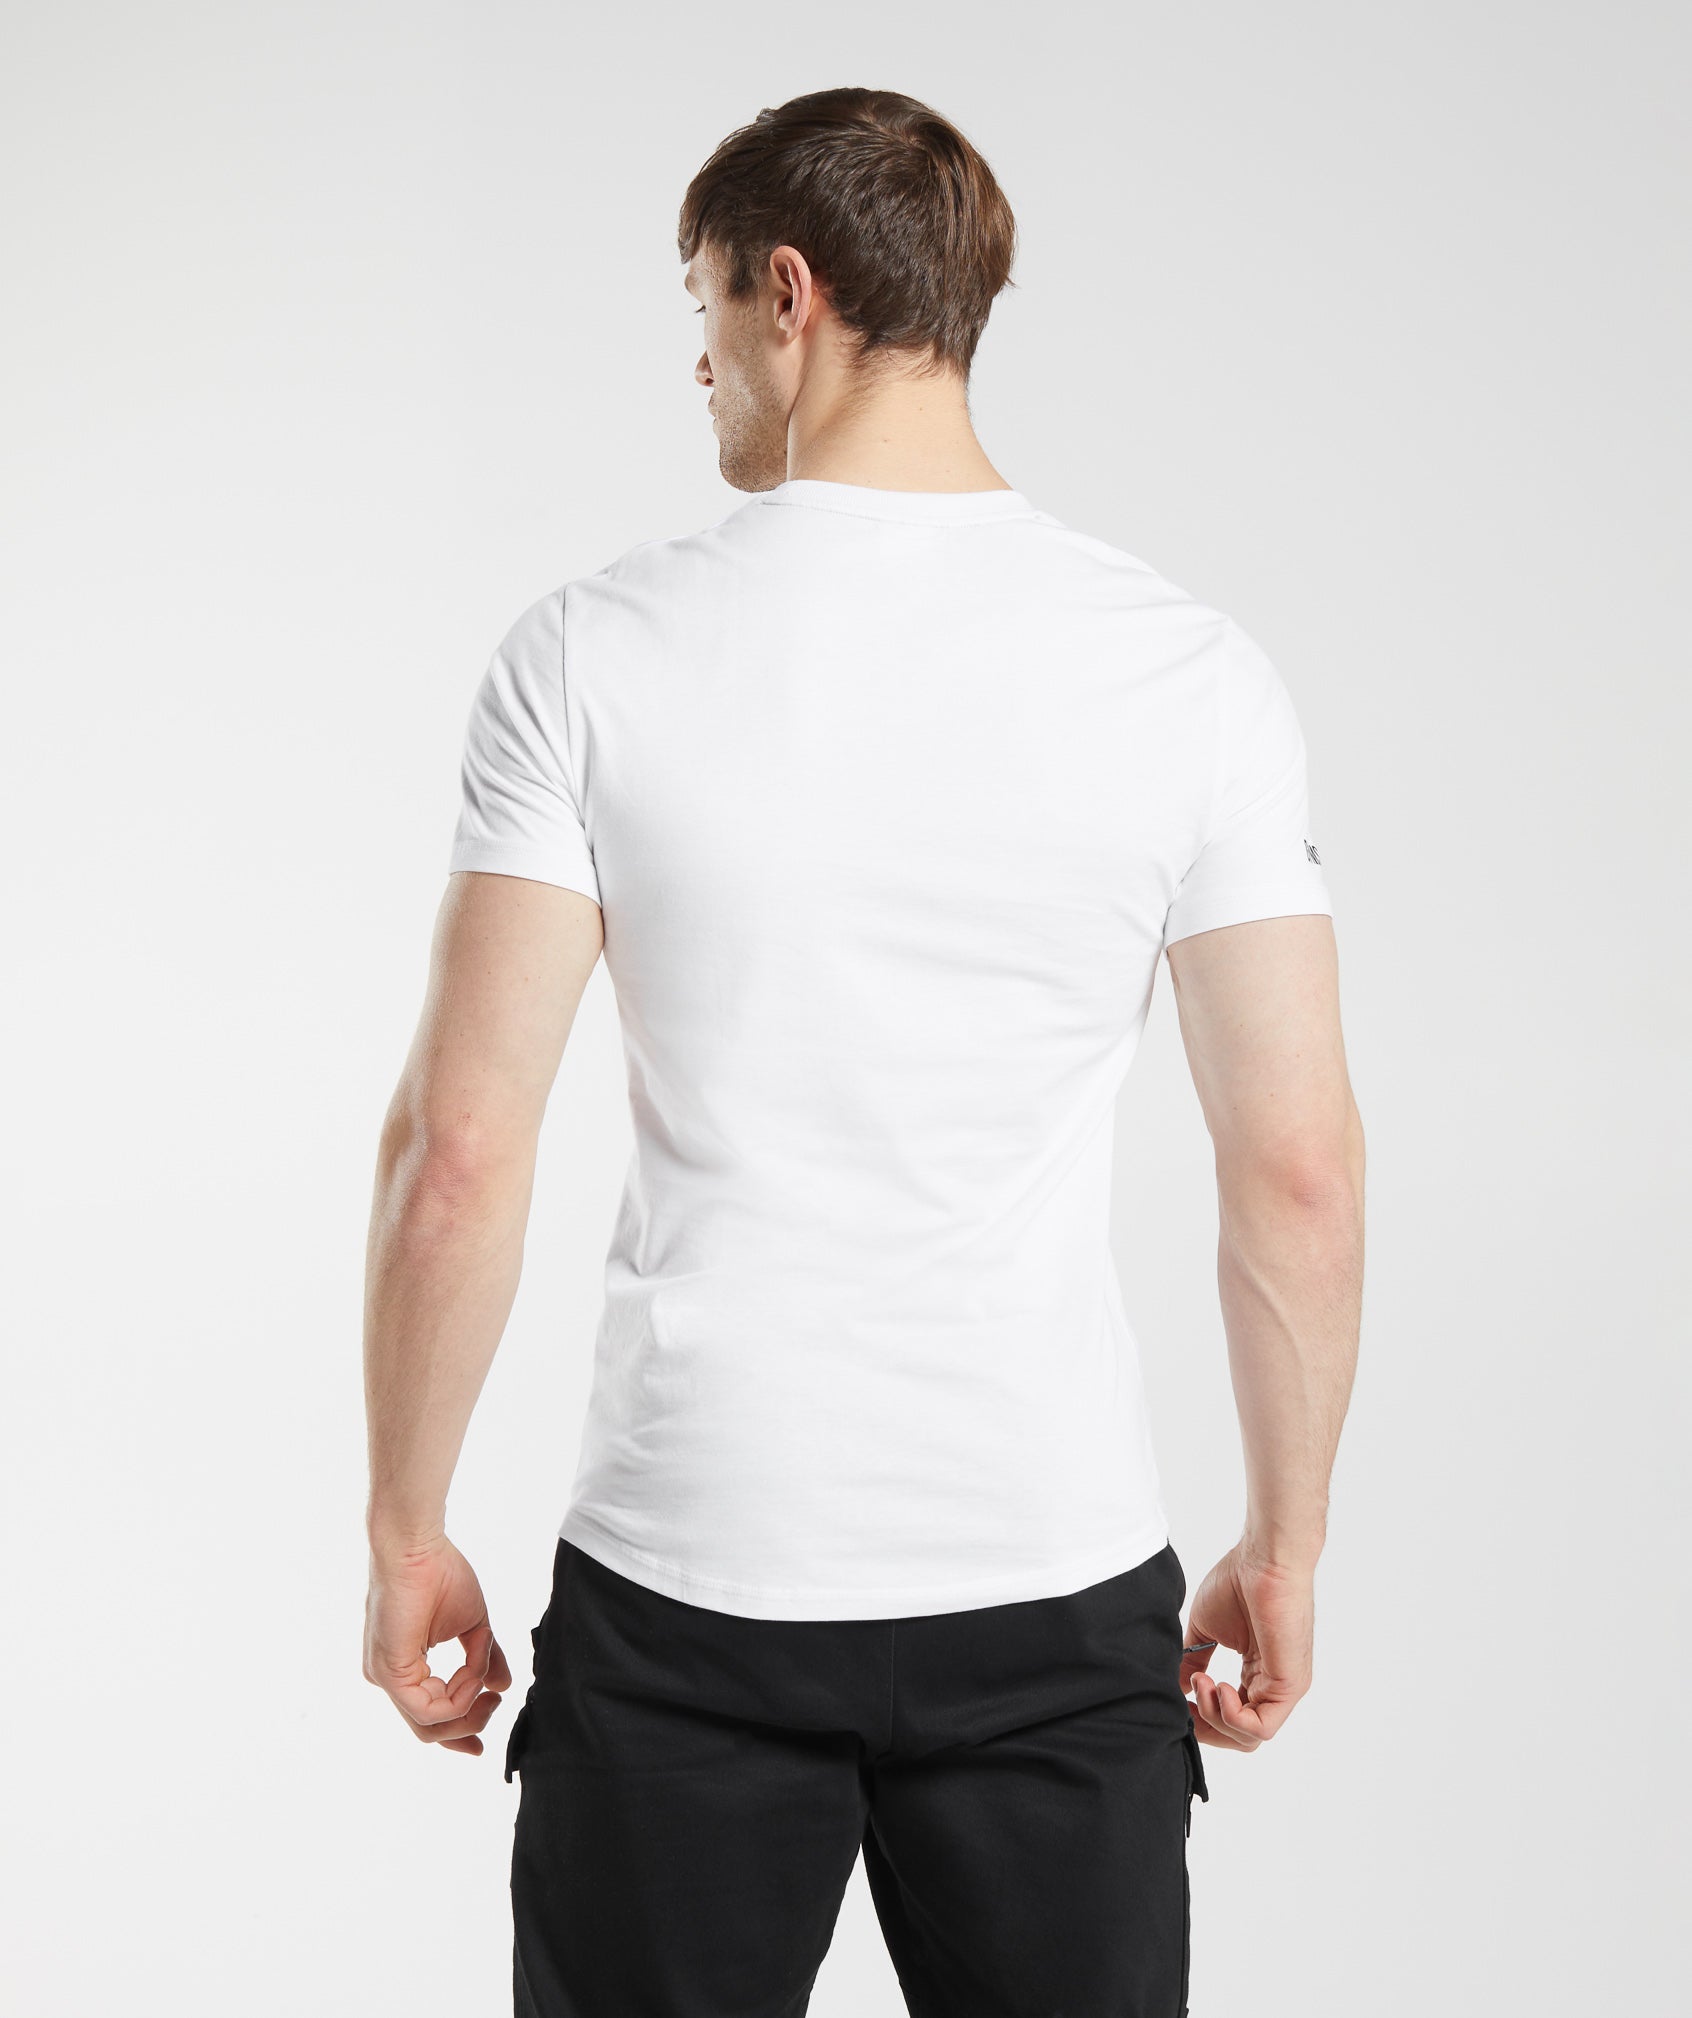 GS x David Laid T-Shirt in White - view 2